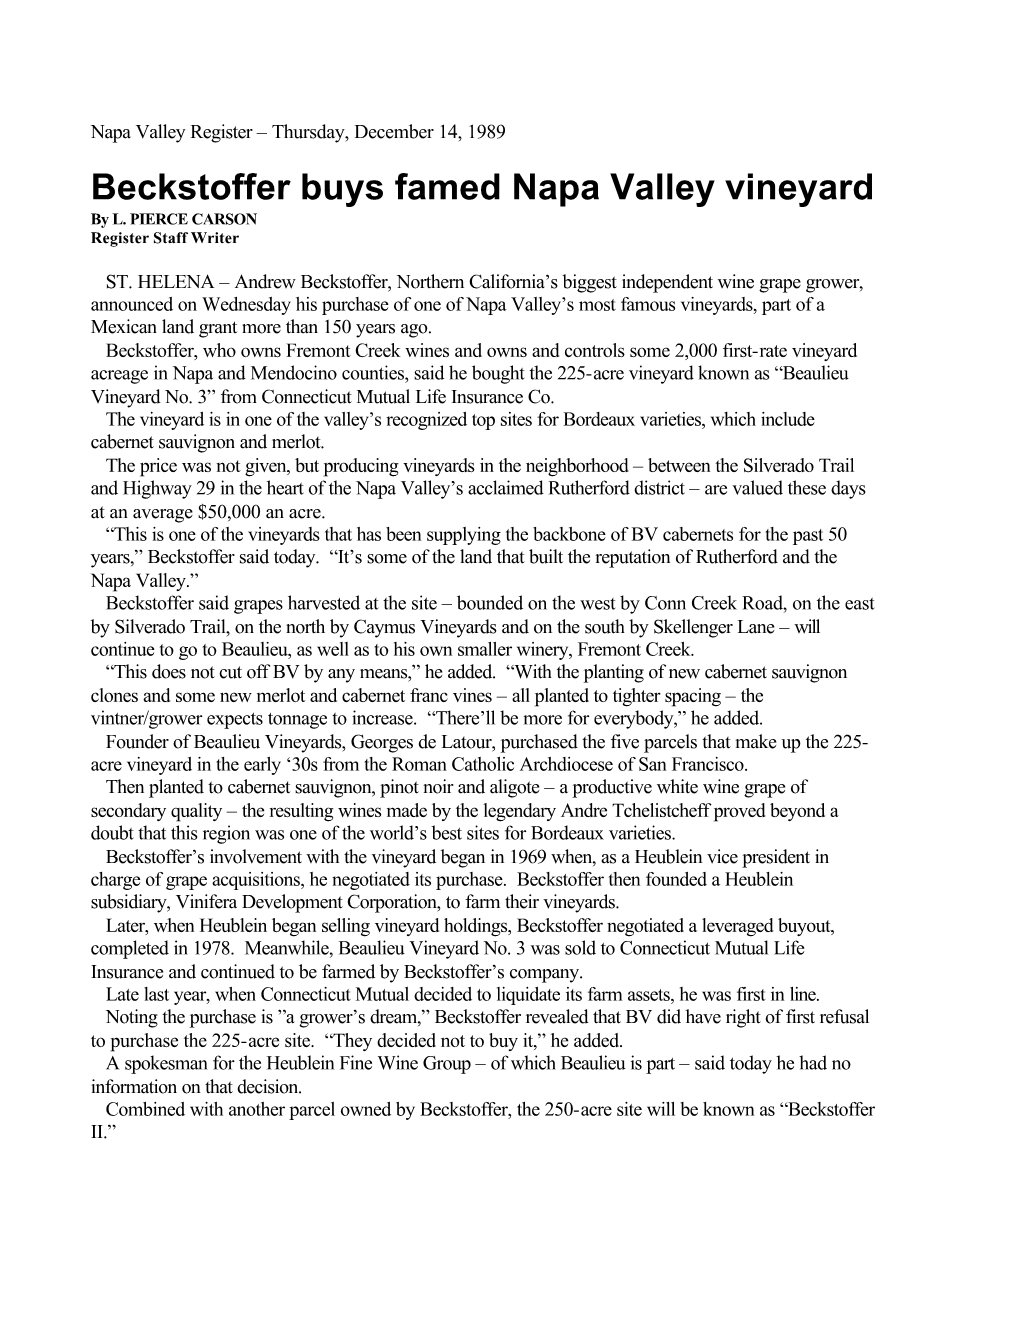 Beckstoffer Buys Famed Napa Valley Vineyard by L